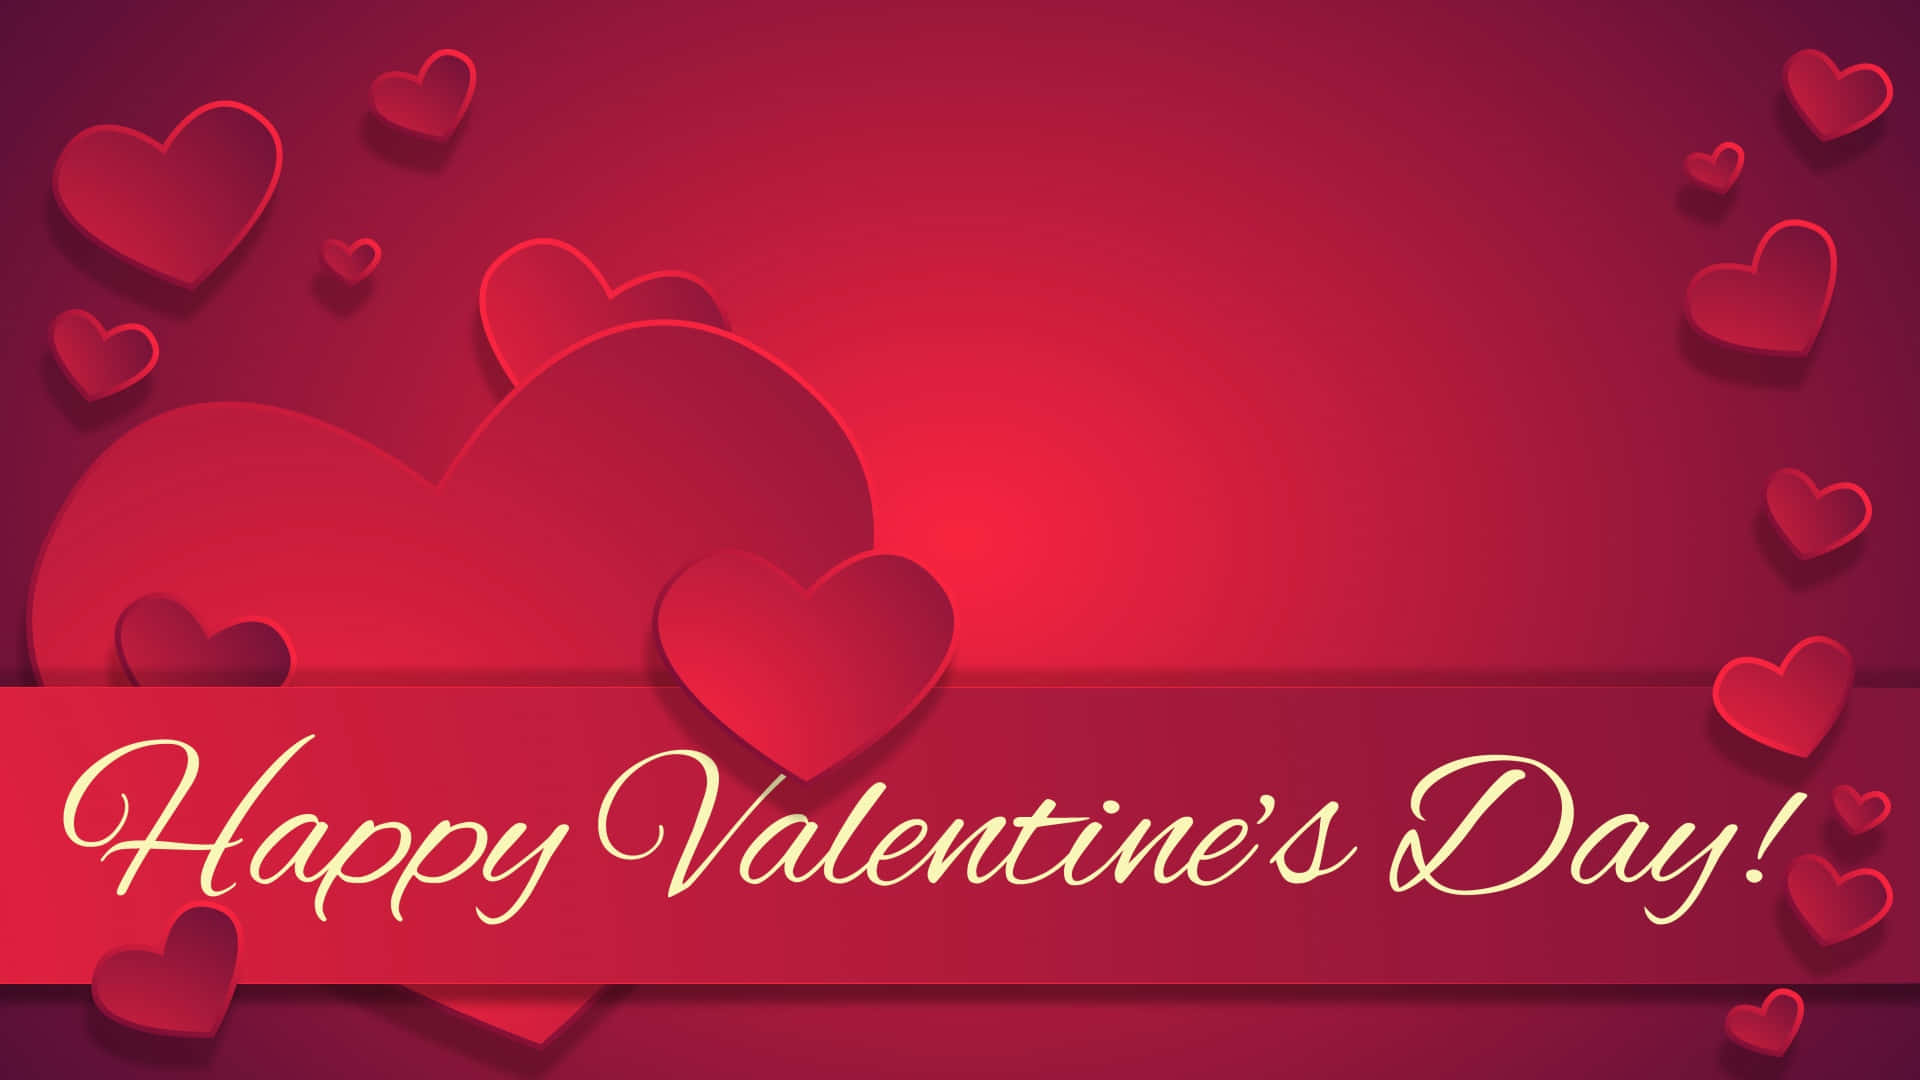 Celebrate Love on Happy Valentine's Day